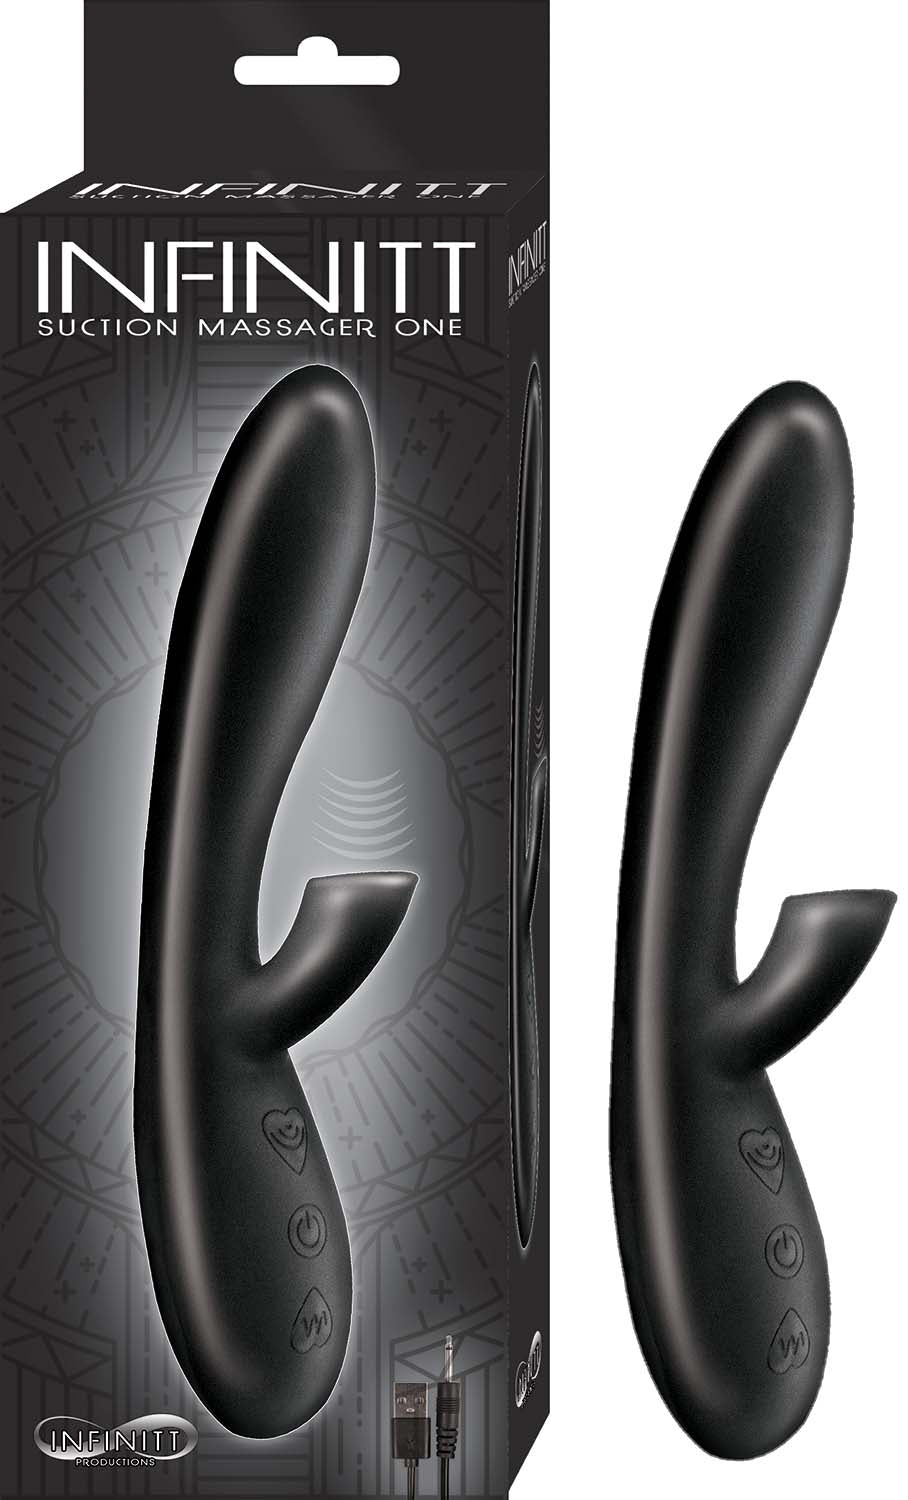 Infinitt Suction Massager One - Black NW2824-1